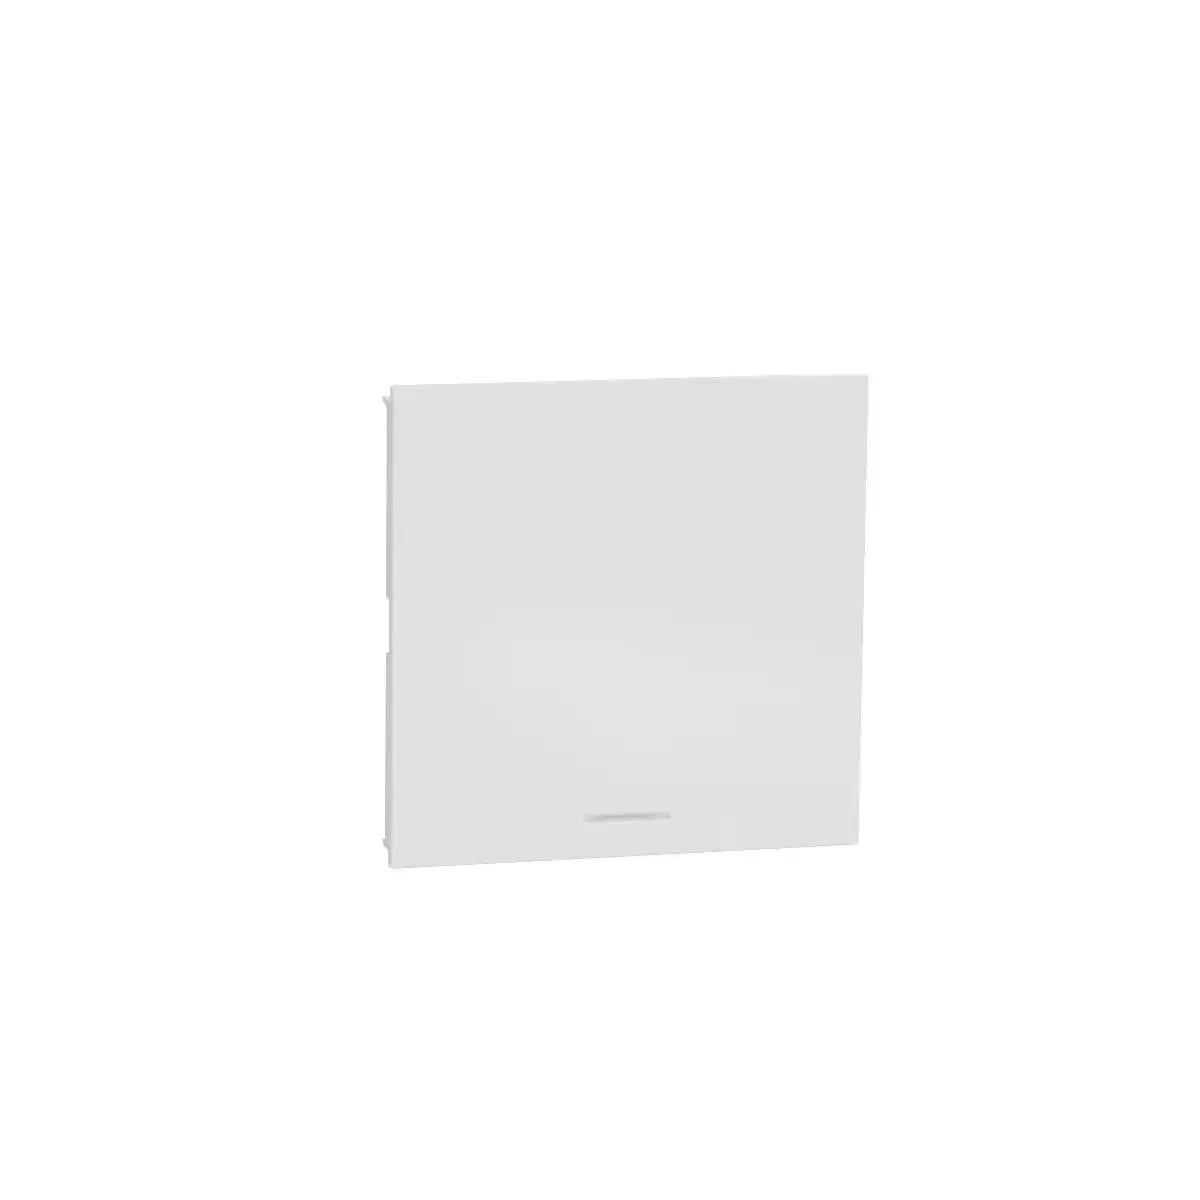 Switch, Avataron A, 16AX 250V, 1 Way with Fluorescent E sized, White